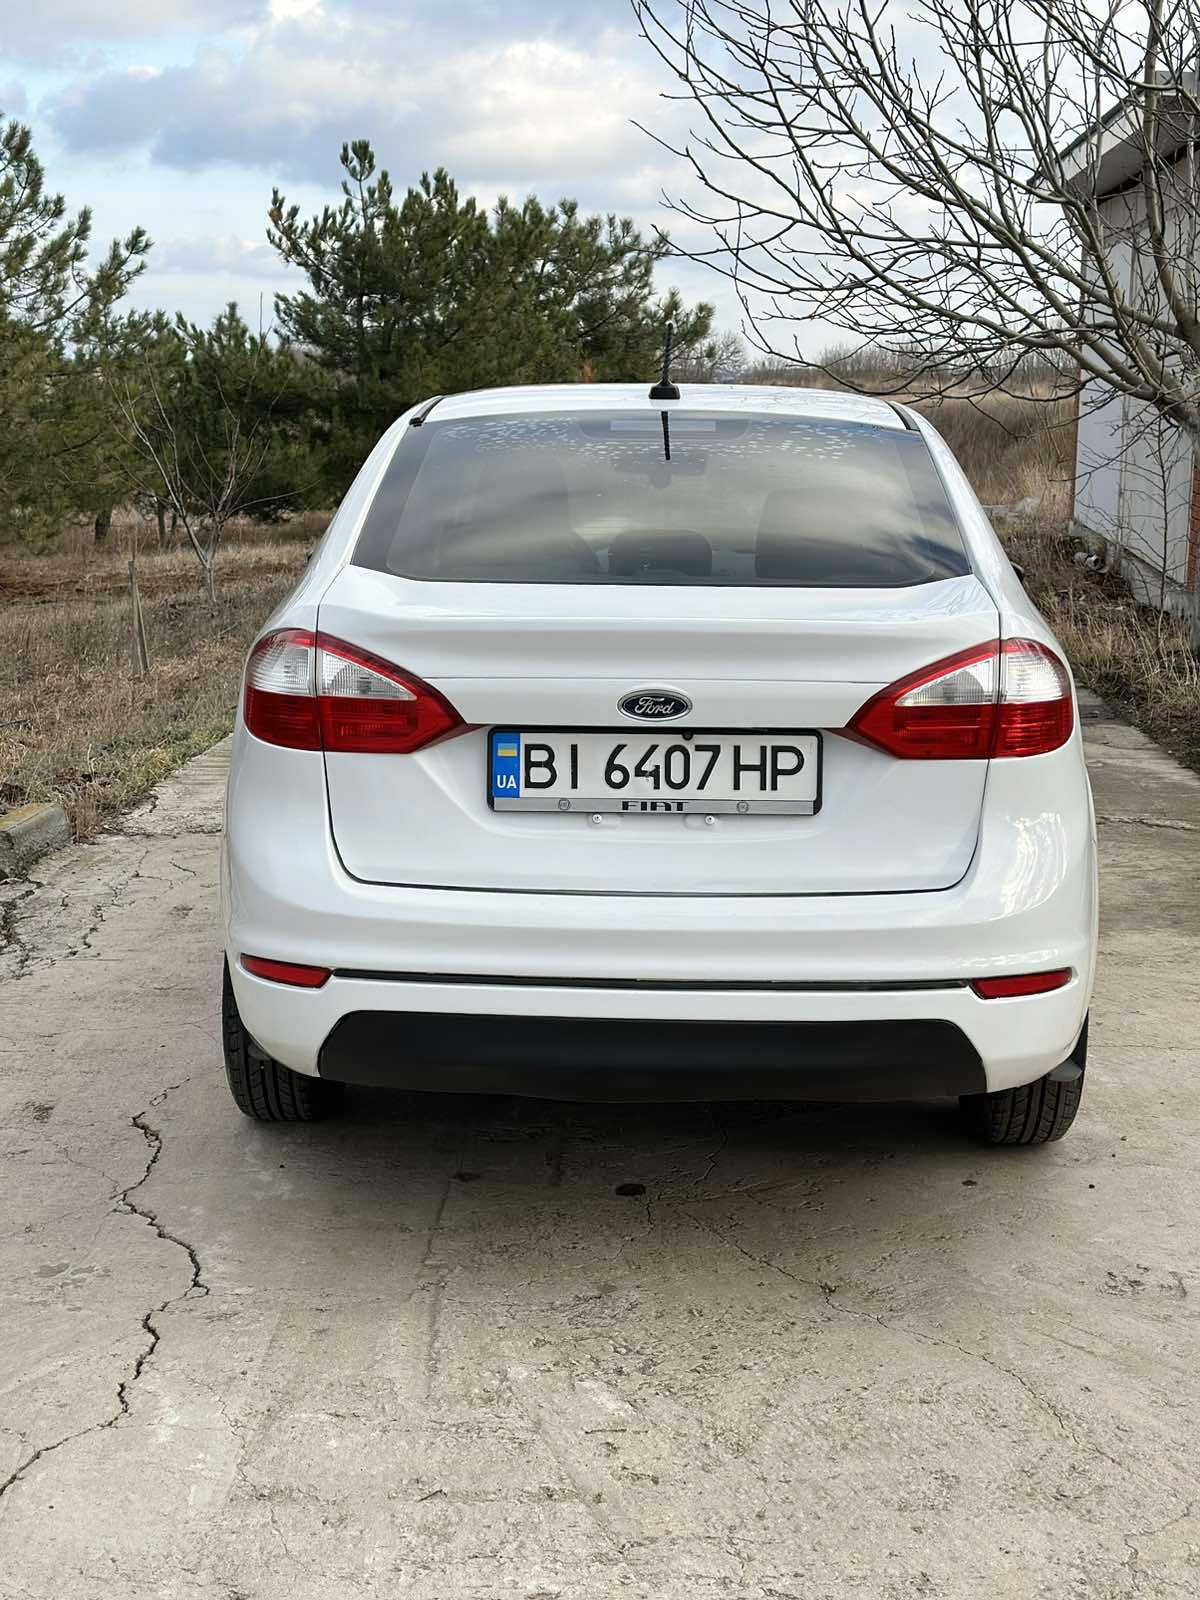 Ford Fiesta 1.6 Автомат, КОЖА, 2014 год (газ/бензин)